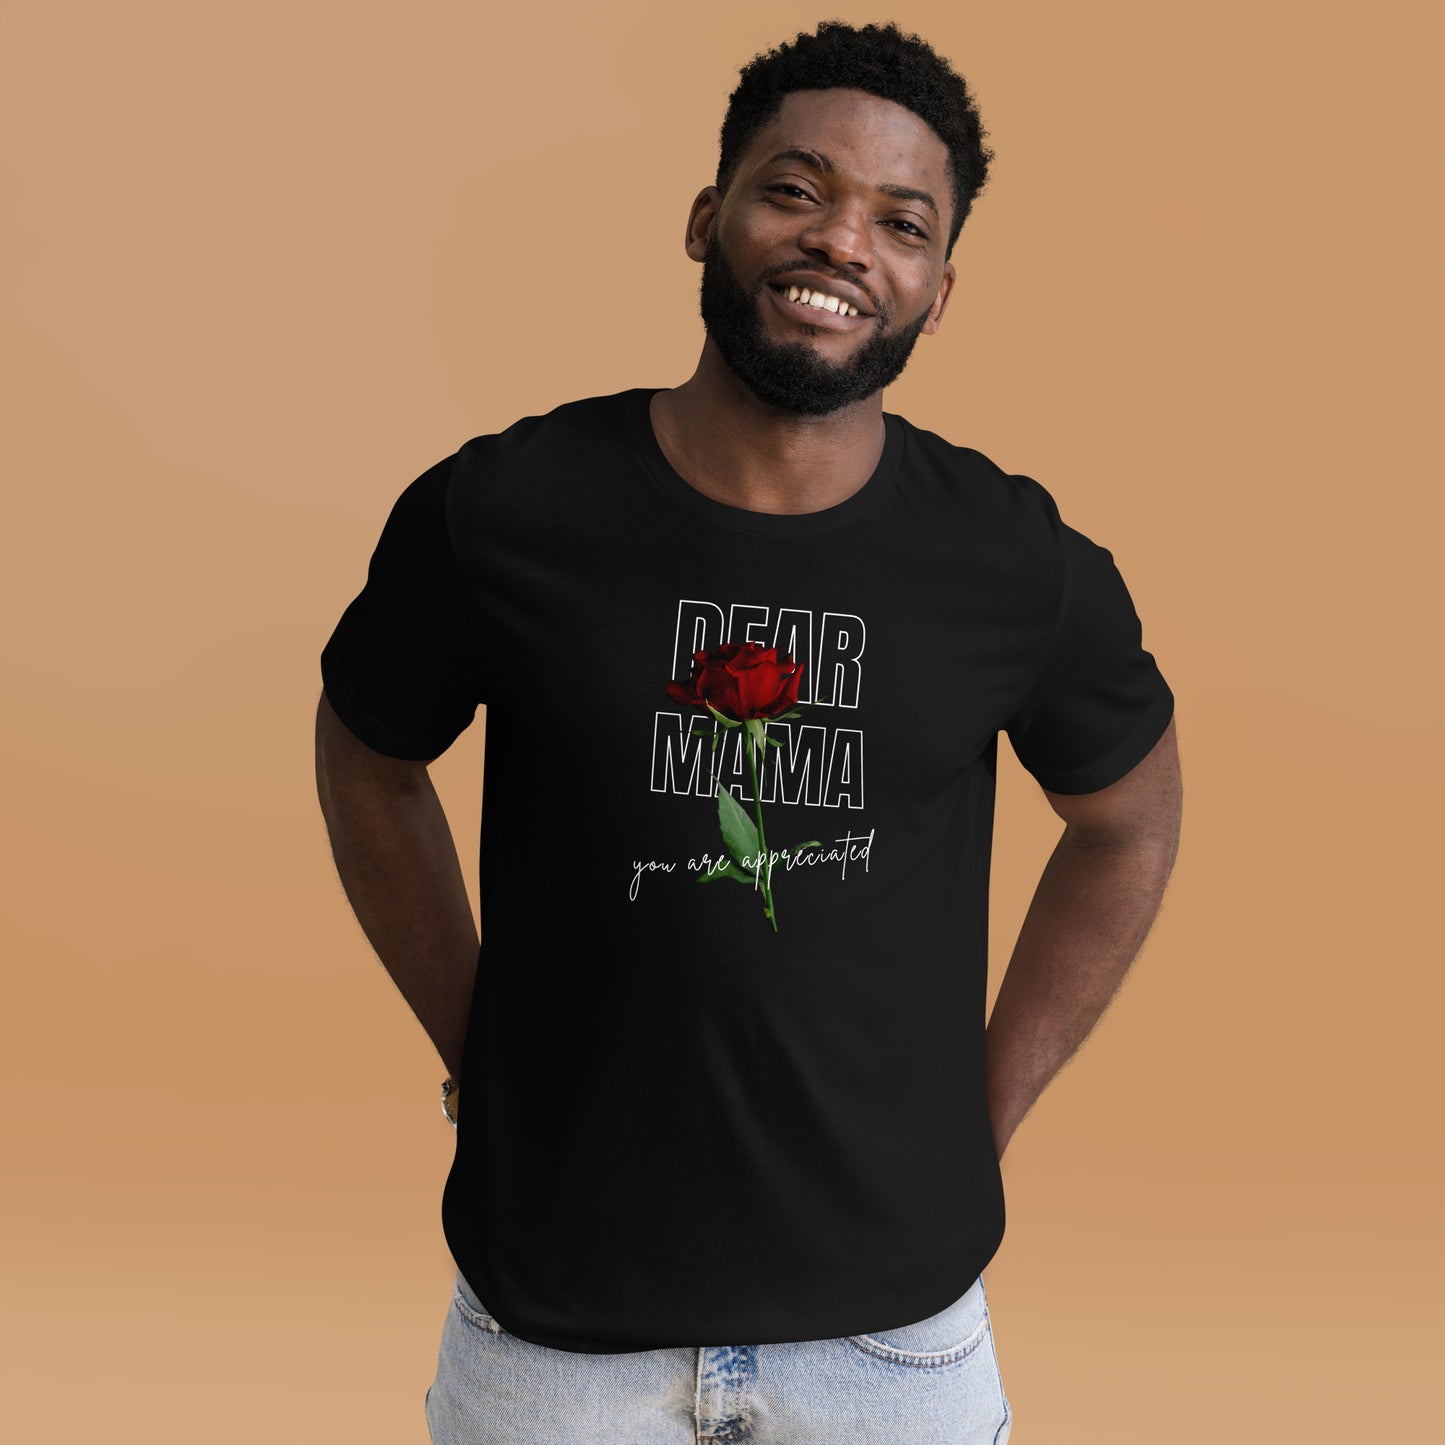 Dear Mama Tupac Shakur Inspired T-shirt, black men's tee